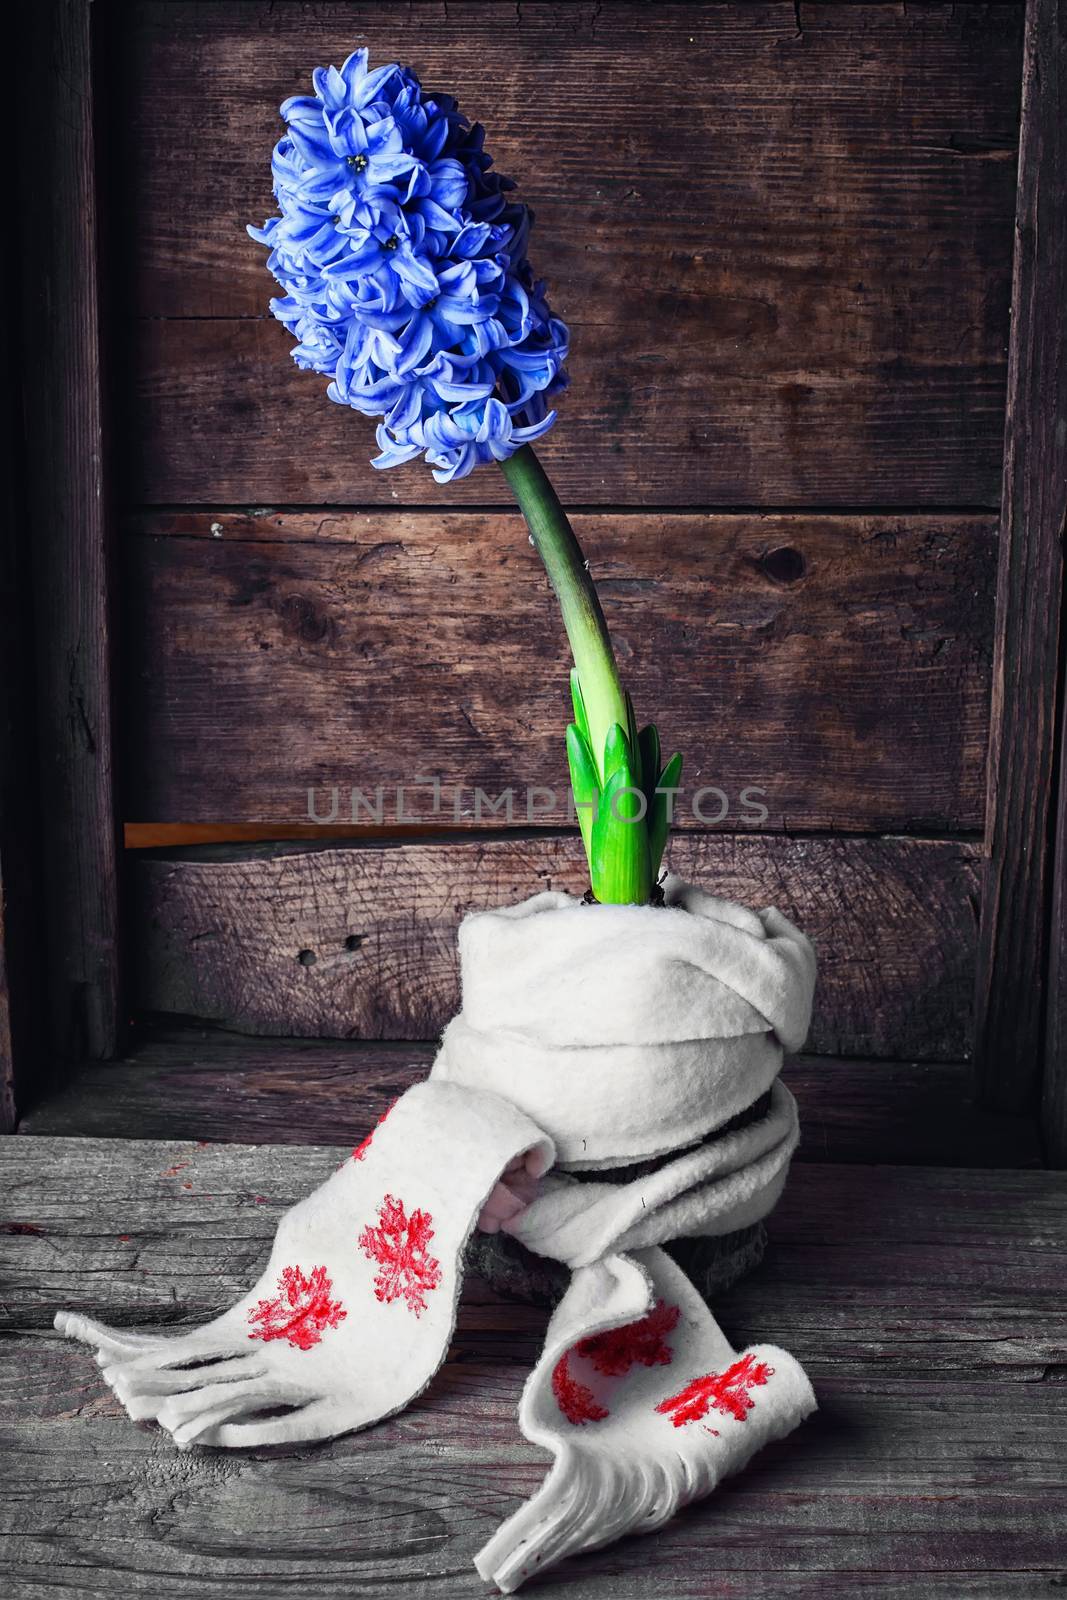 Hyacinth wrapped in scarf by LMykola